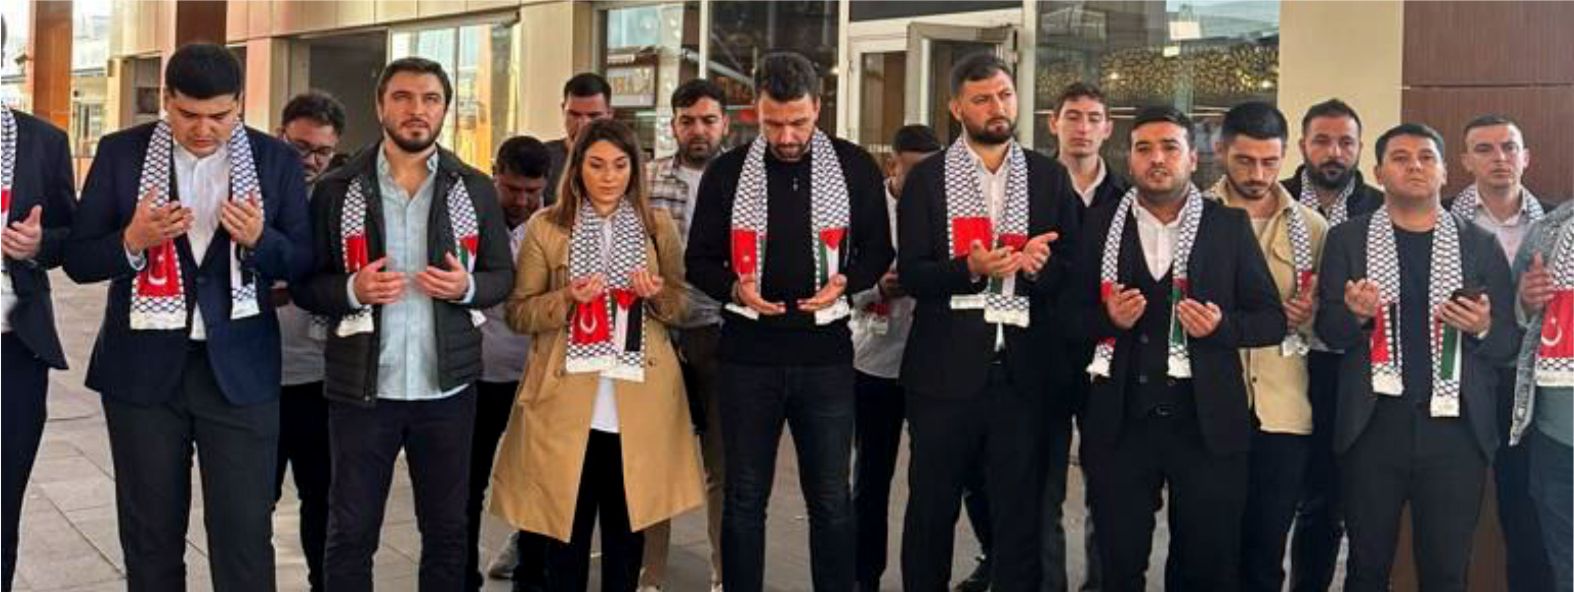 AK Parti’nin gençleri Starbucks’ta Say Stop yaptı